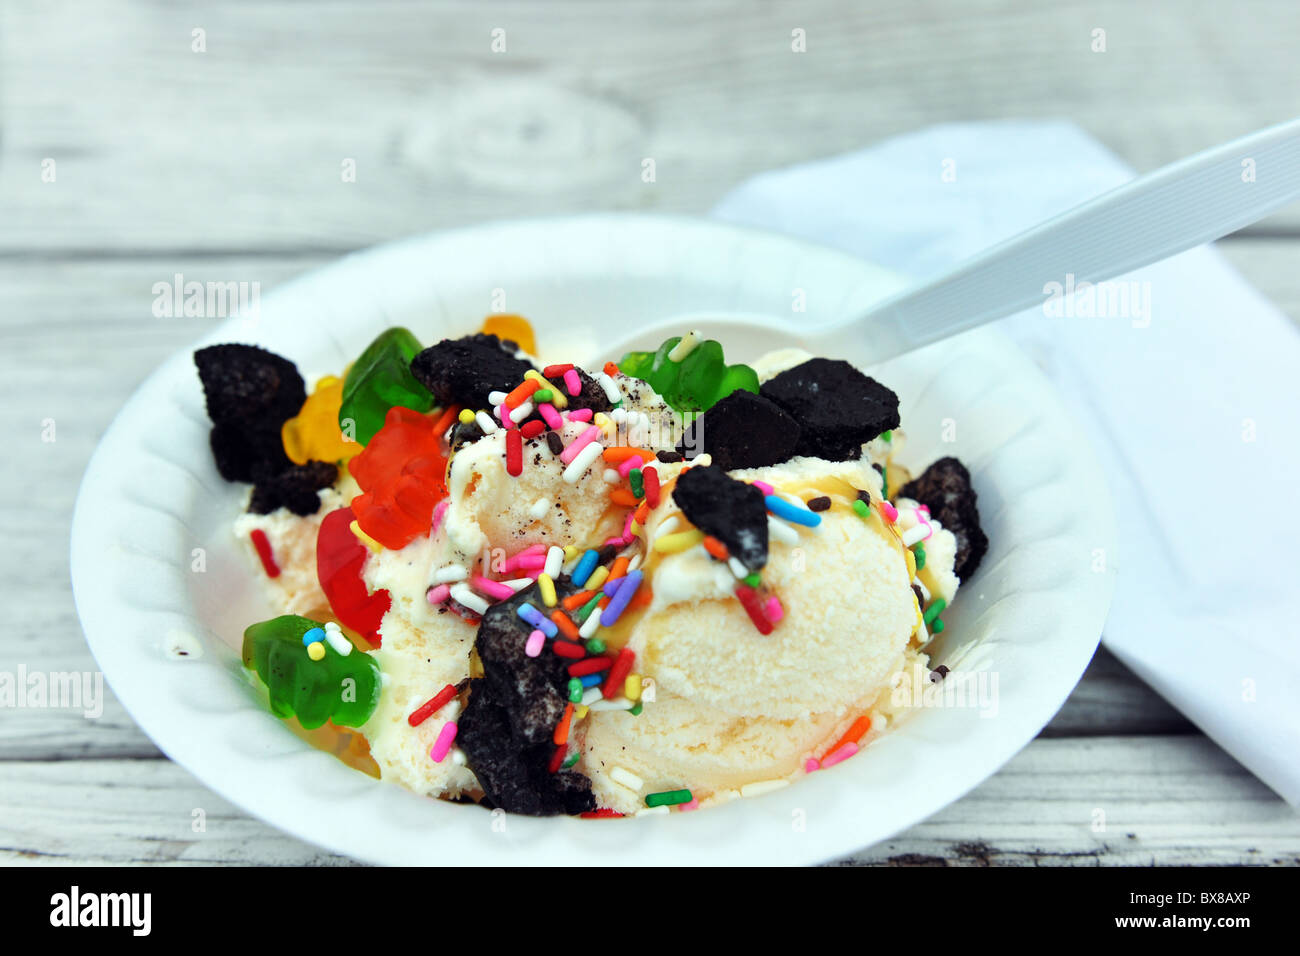 Ice cream and sweets Stock Photo